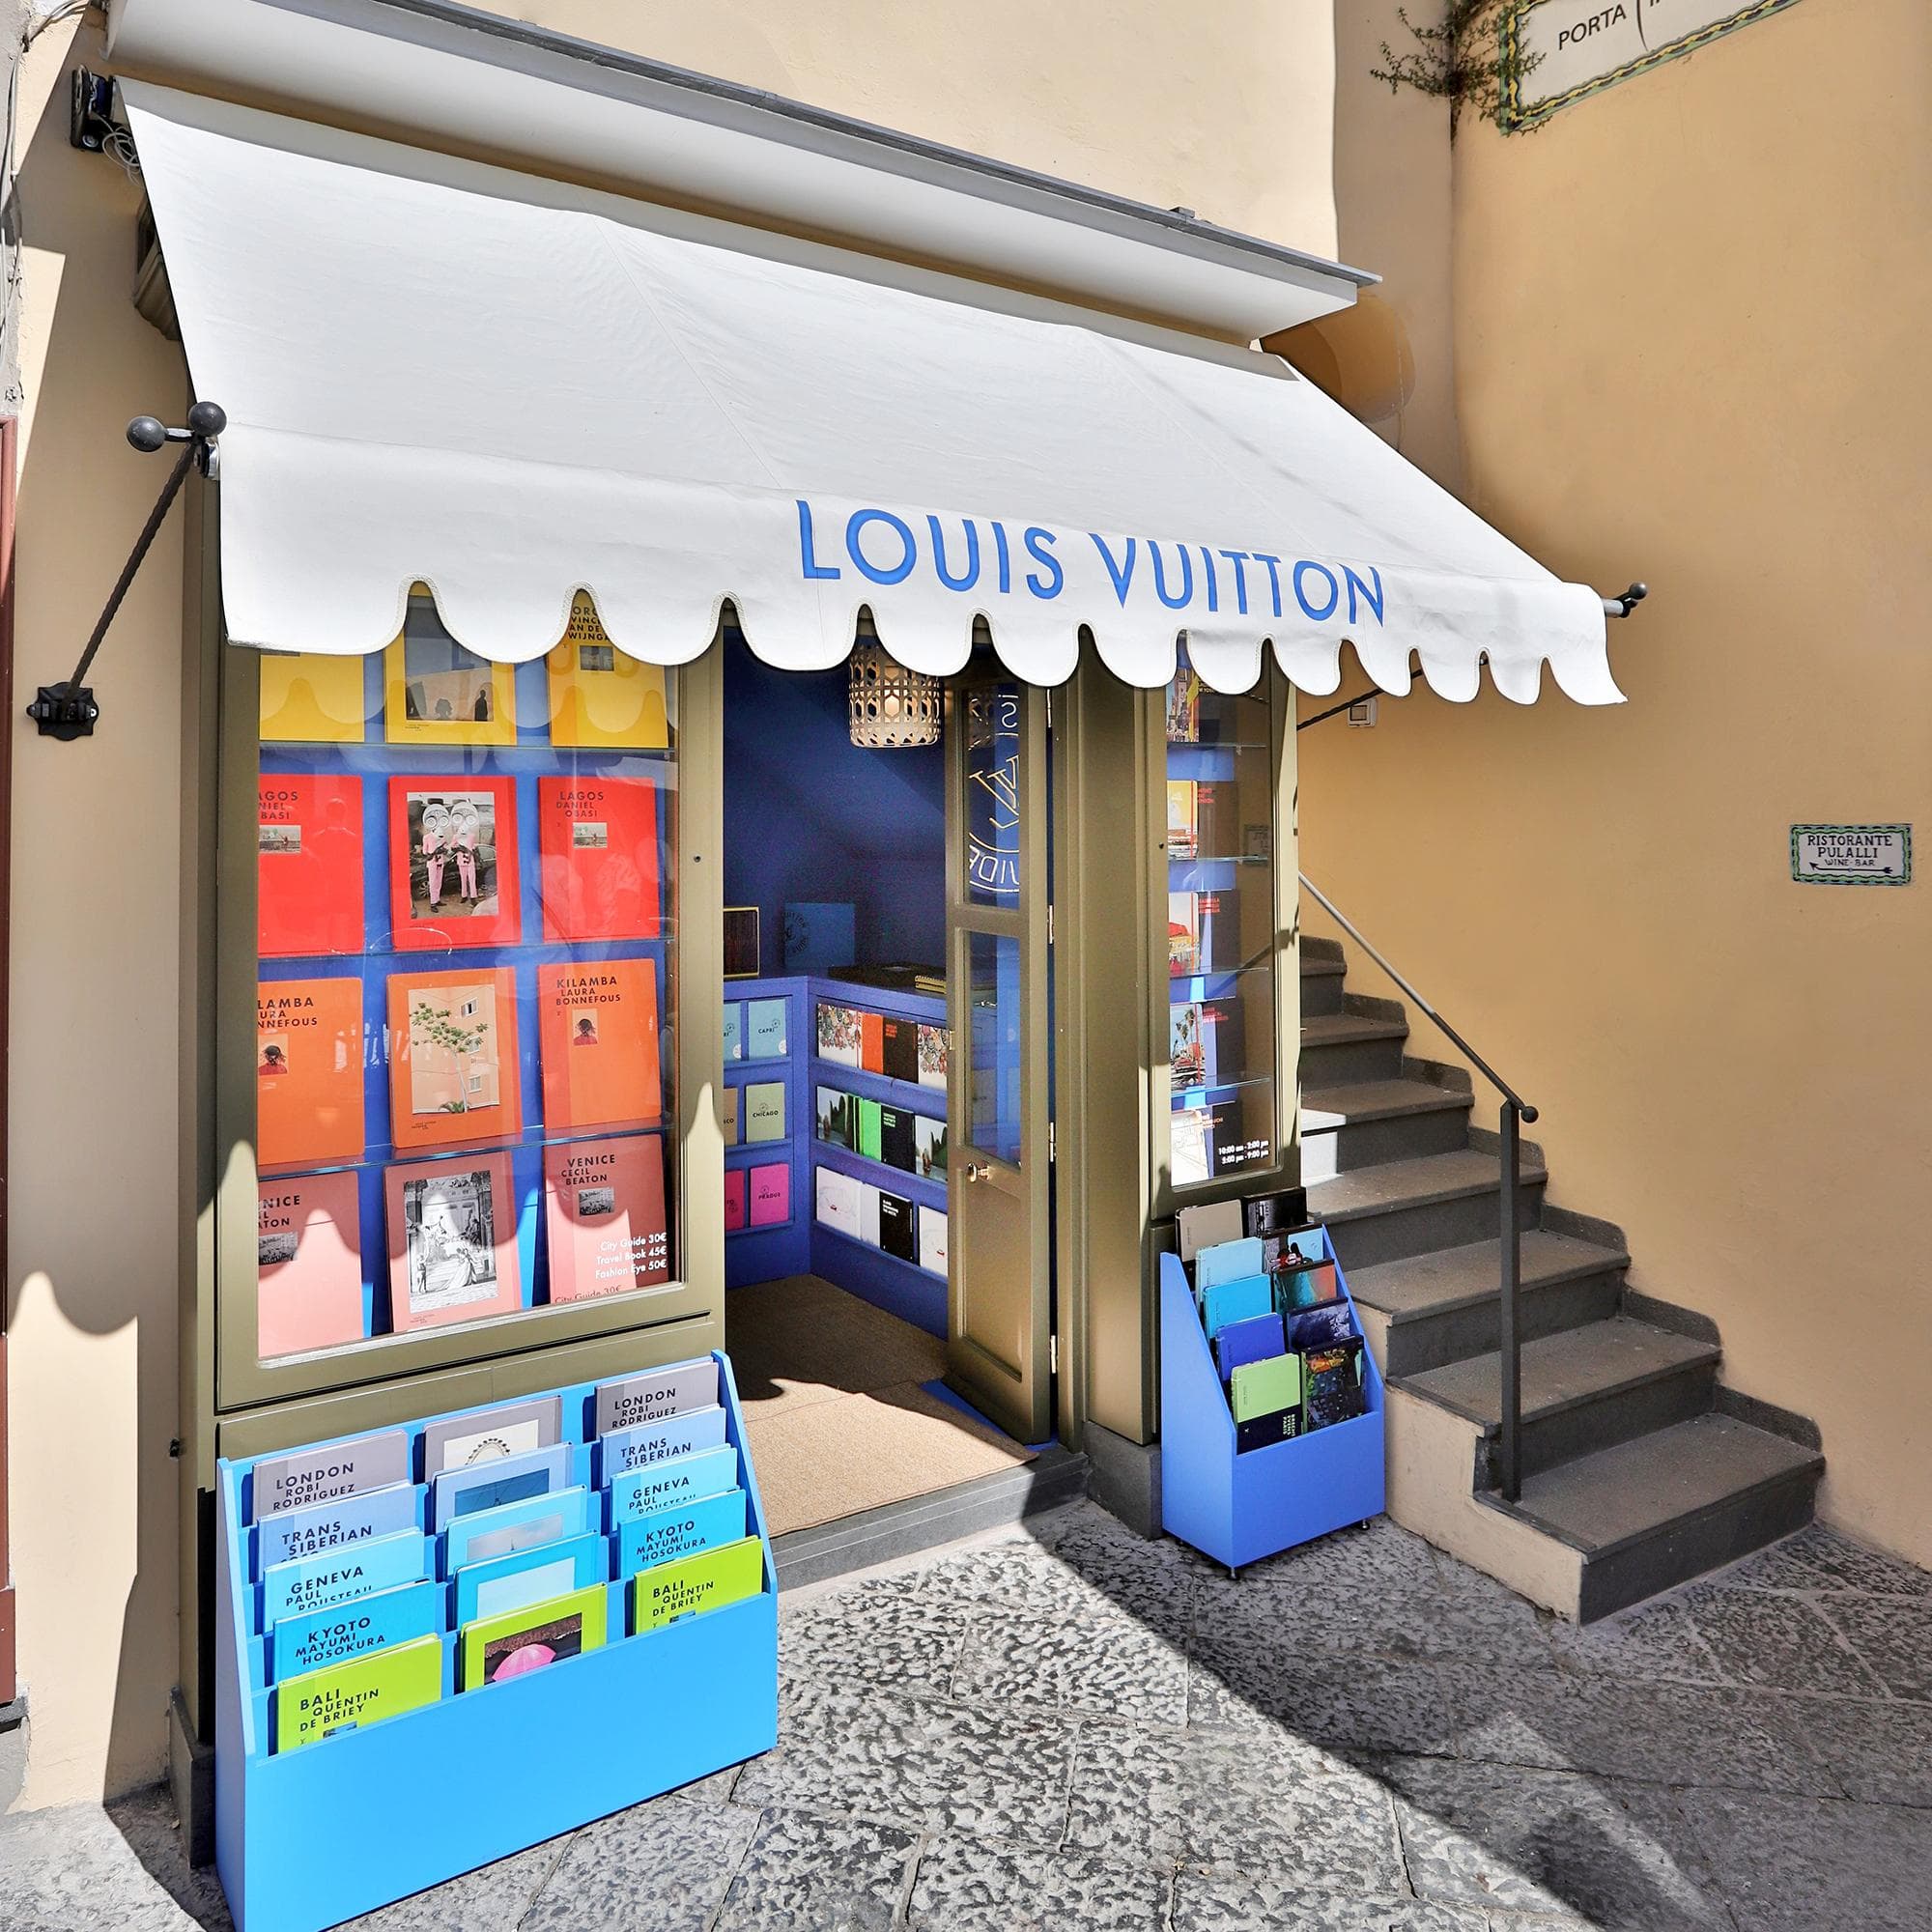 Louis Vuitton - Louis Vuitton inaugurates its most